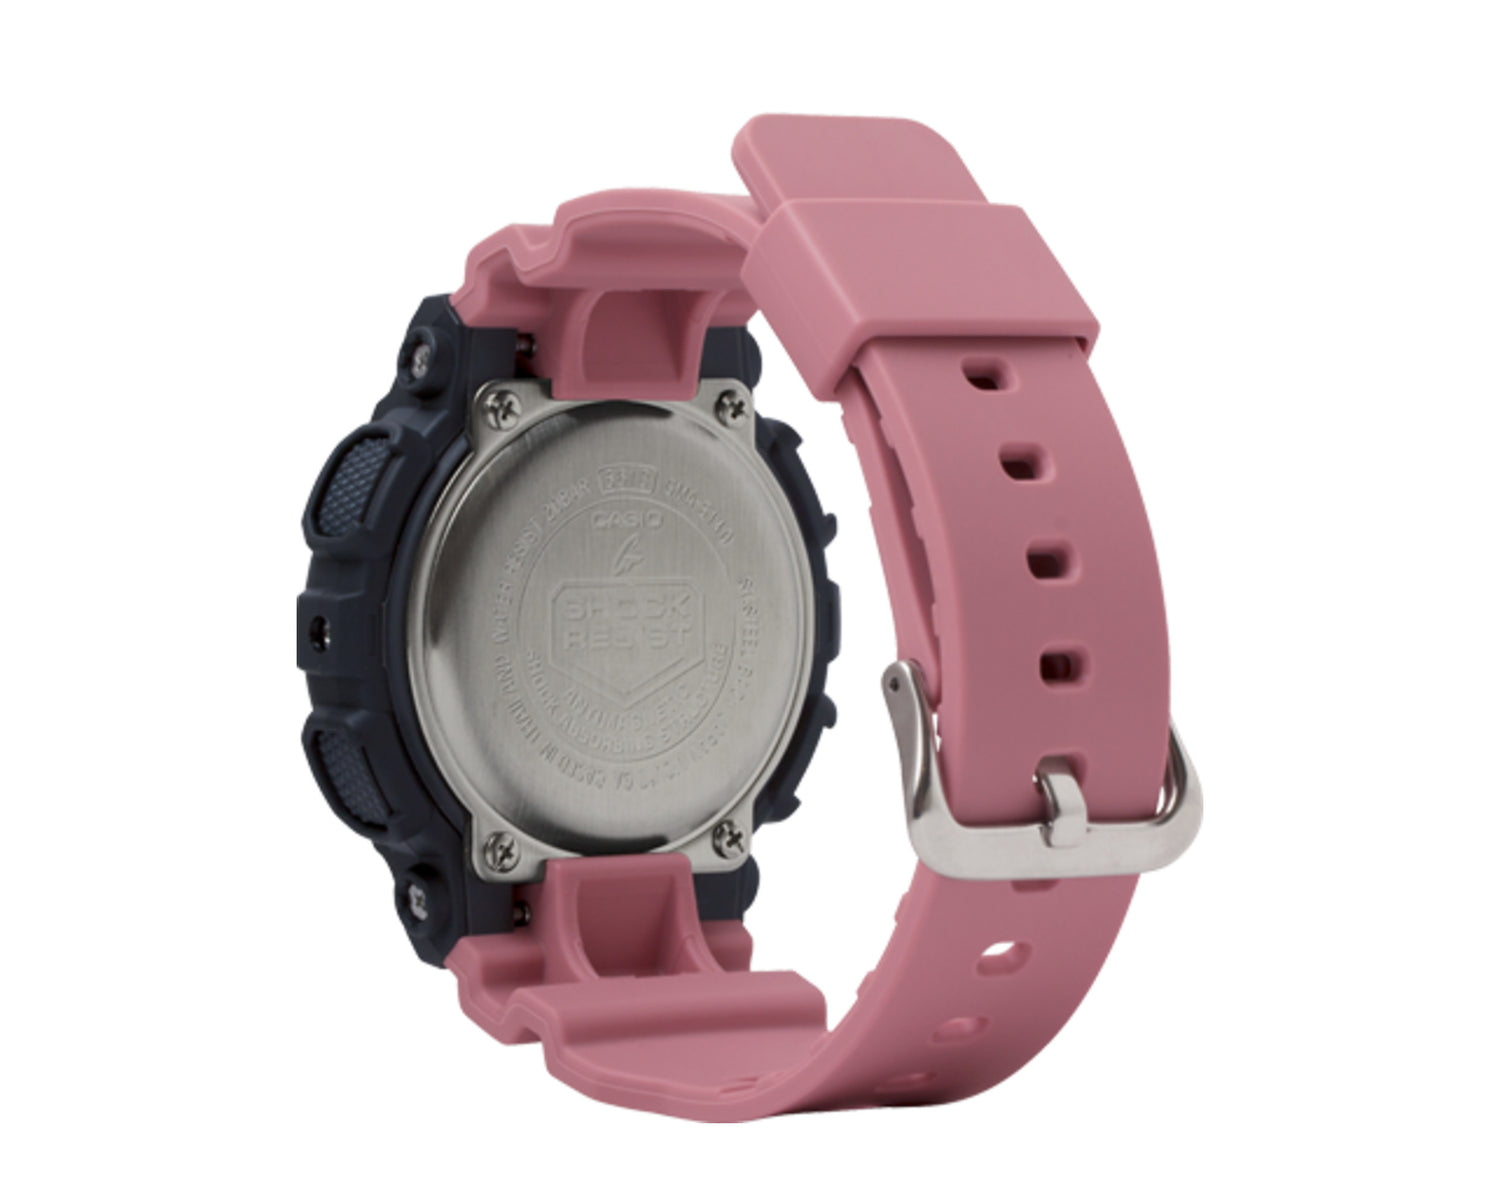 Casio G-Shock GMAS140 S Series Analog-Digital Resin Women's Watch